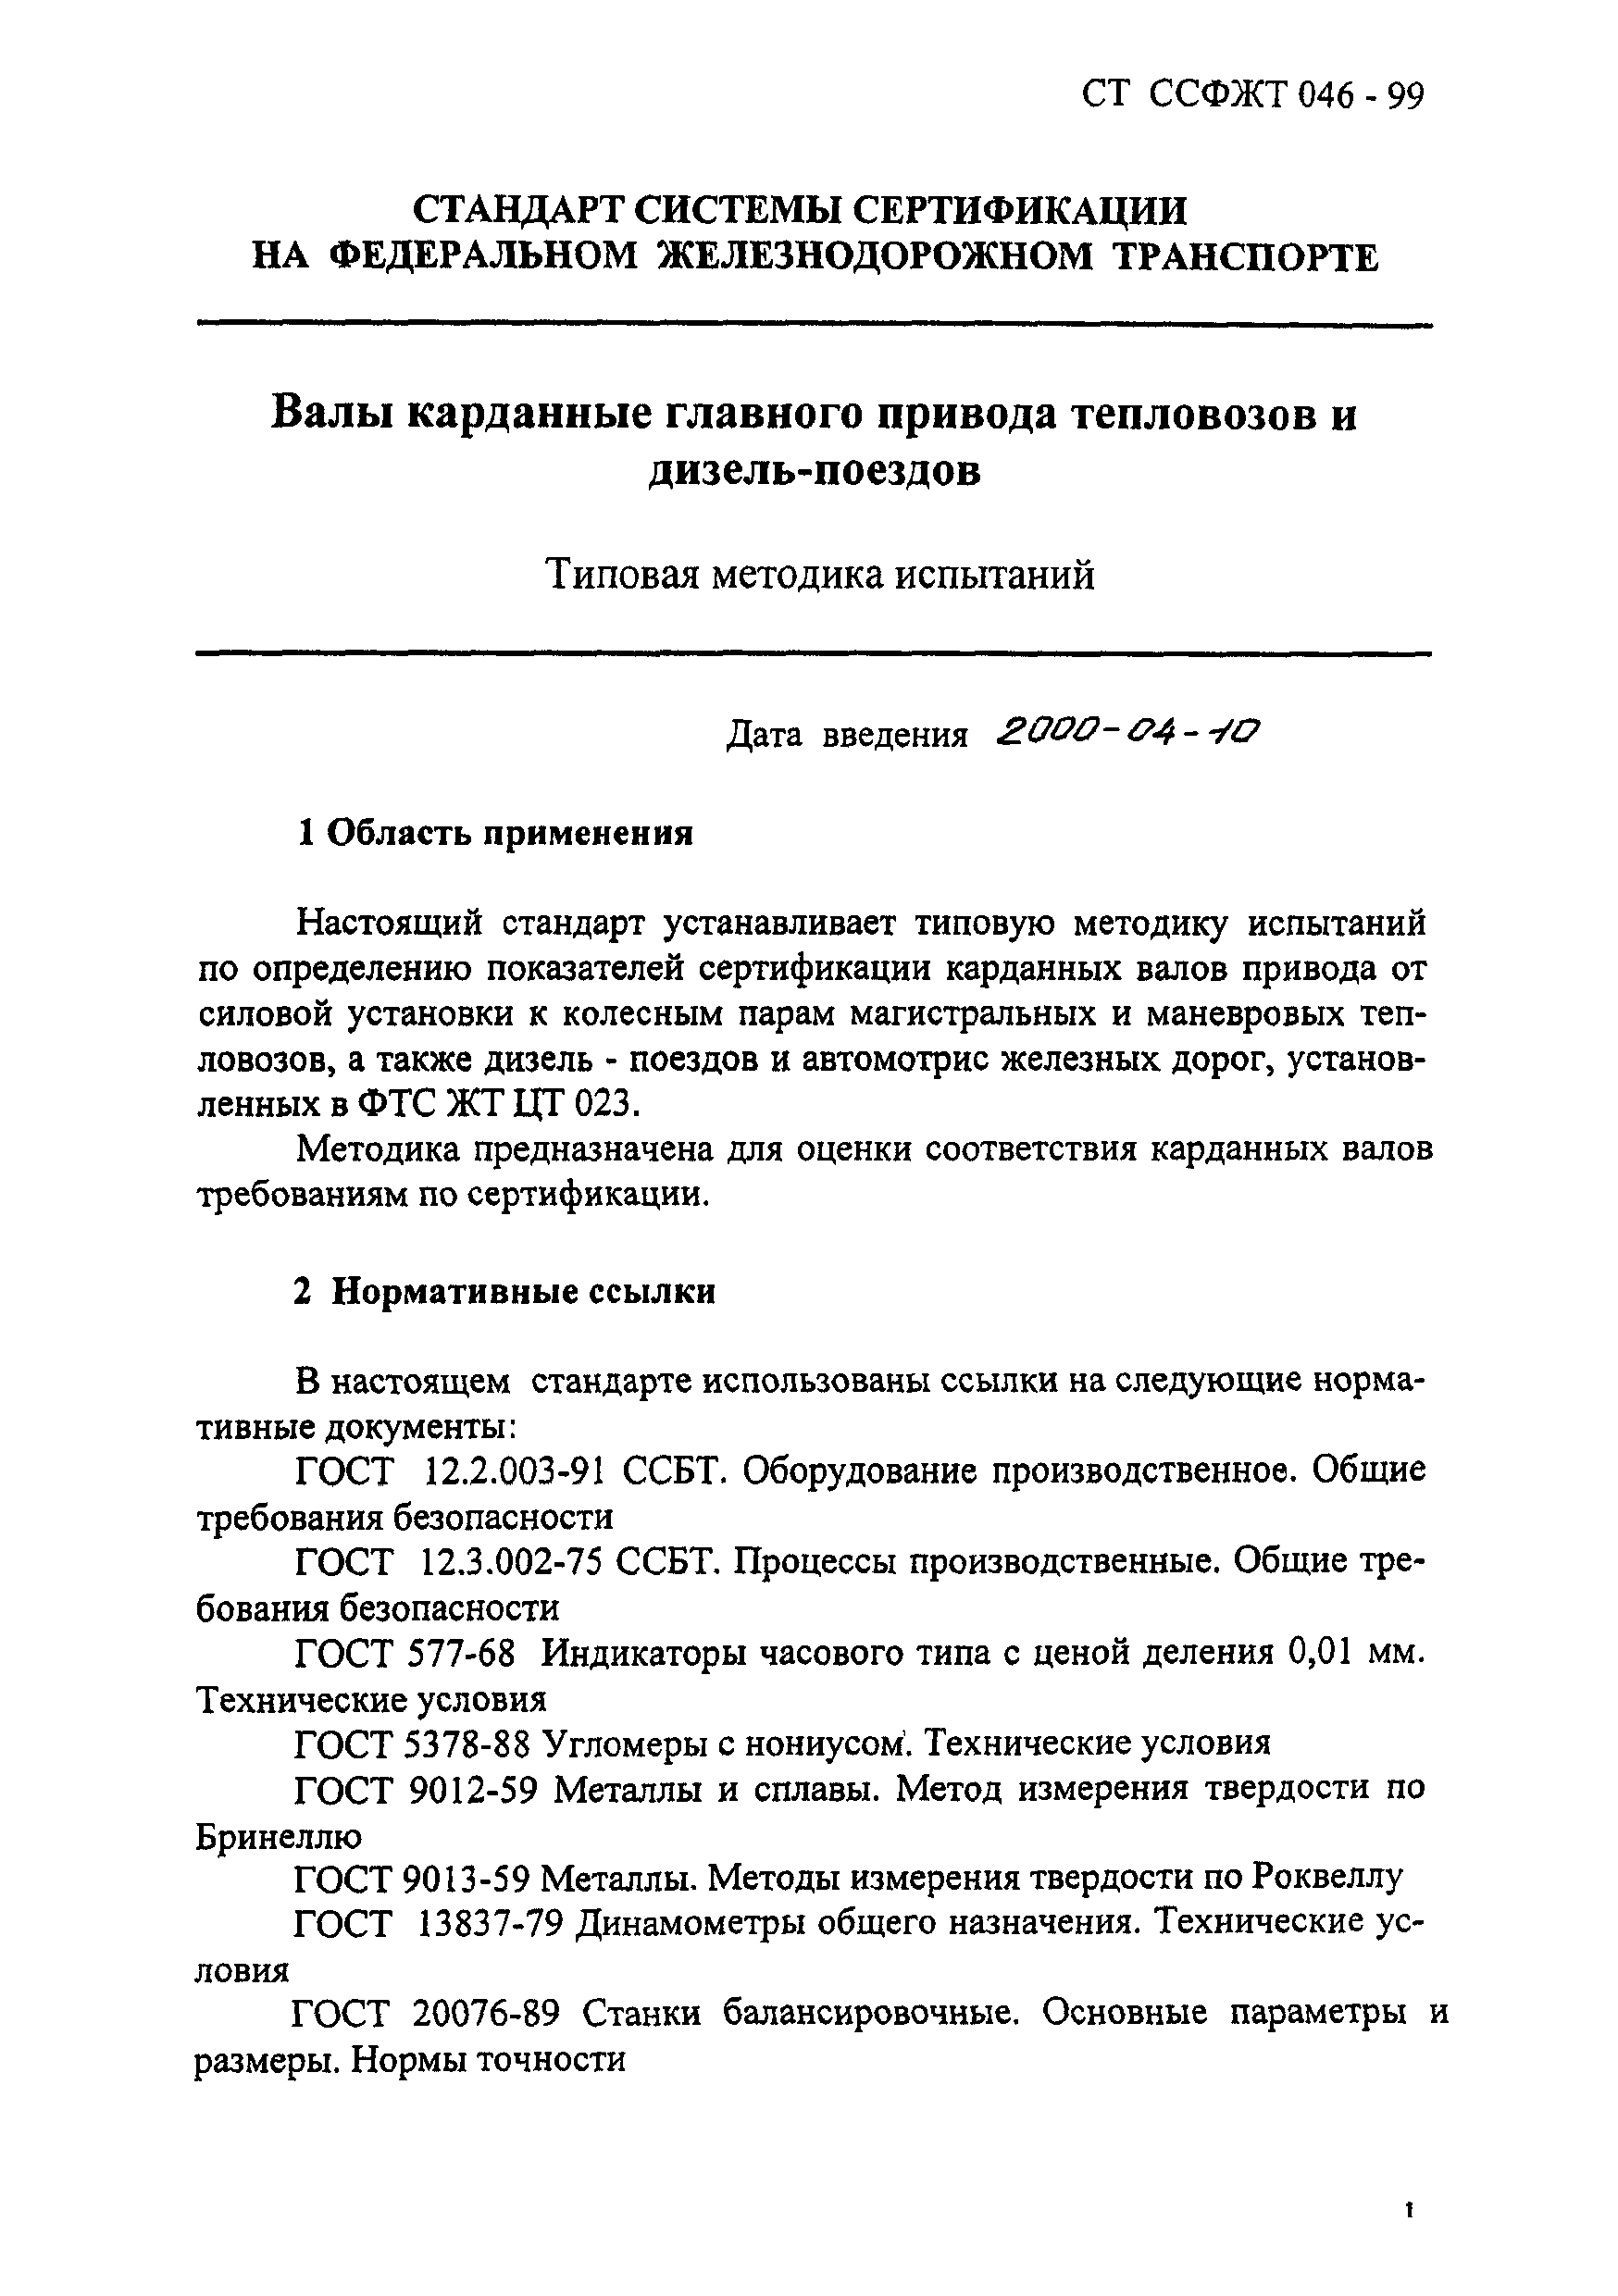 СТ ССФЖТ ЦТ 046-99